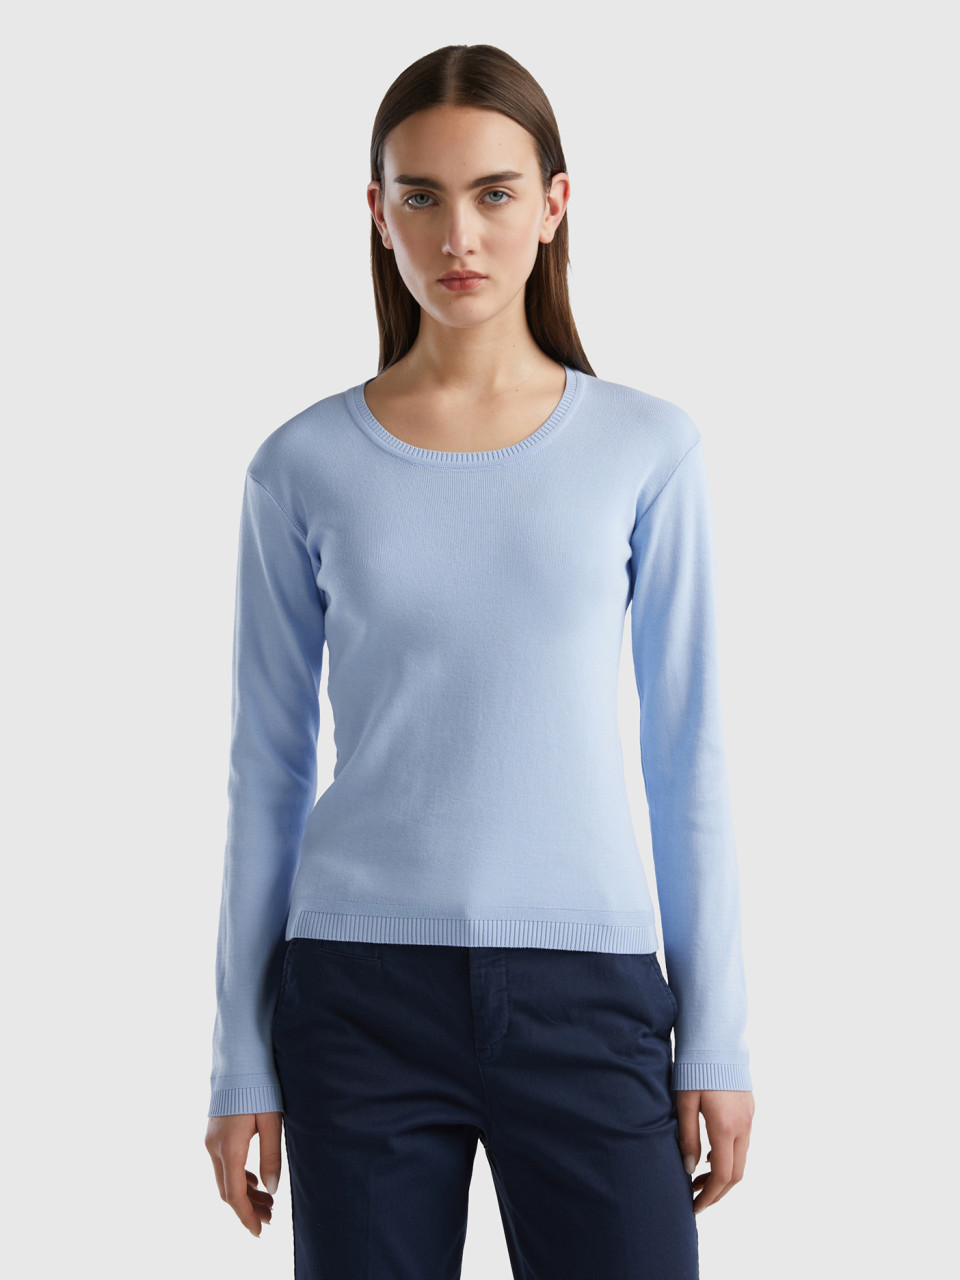 Benetton, Crew Neck Sweater In Pure Cotton, Sky Blue, Women